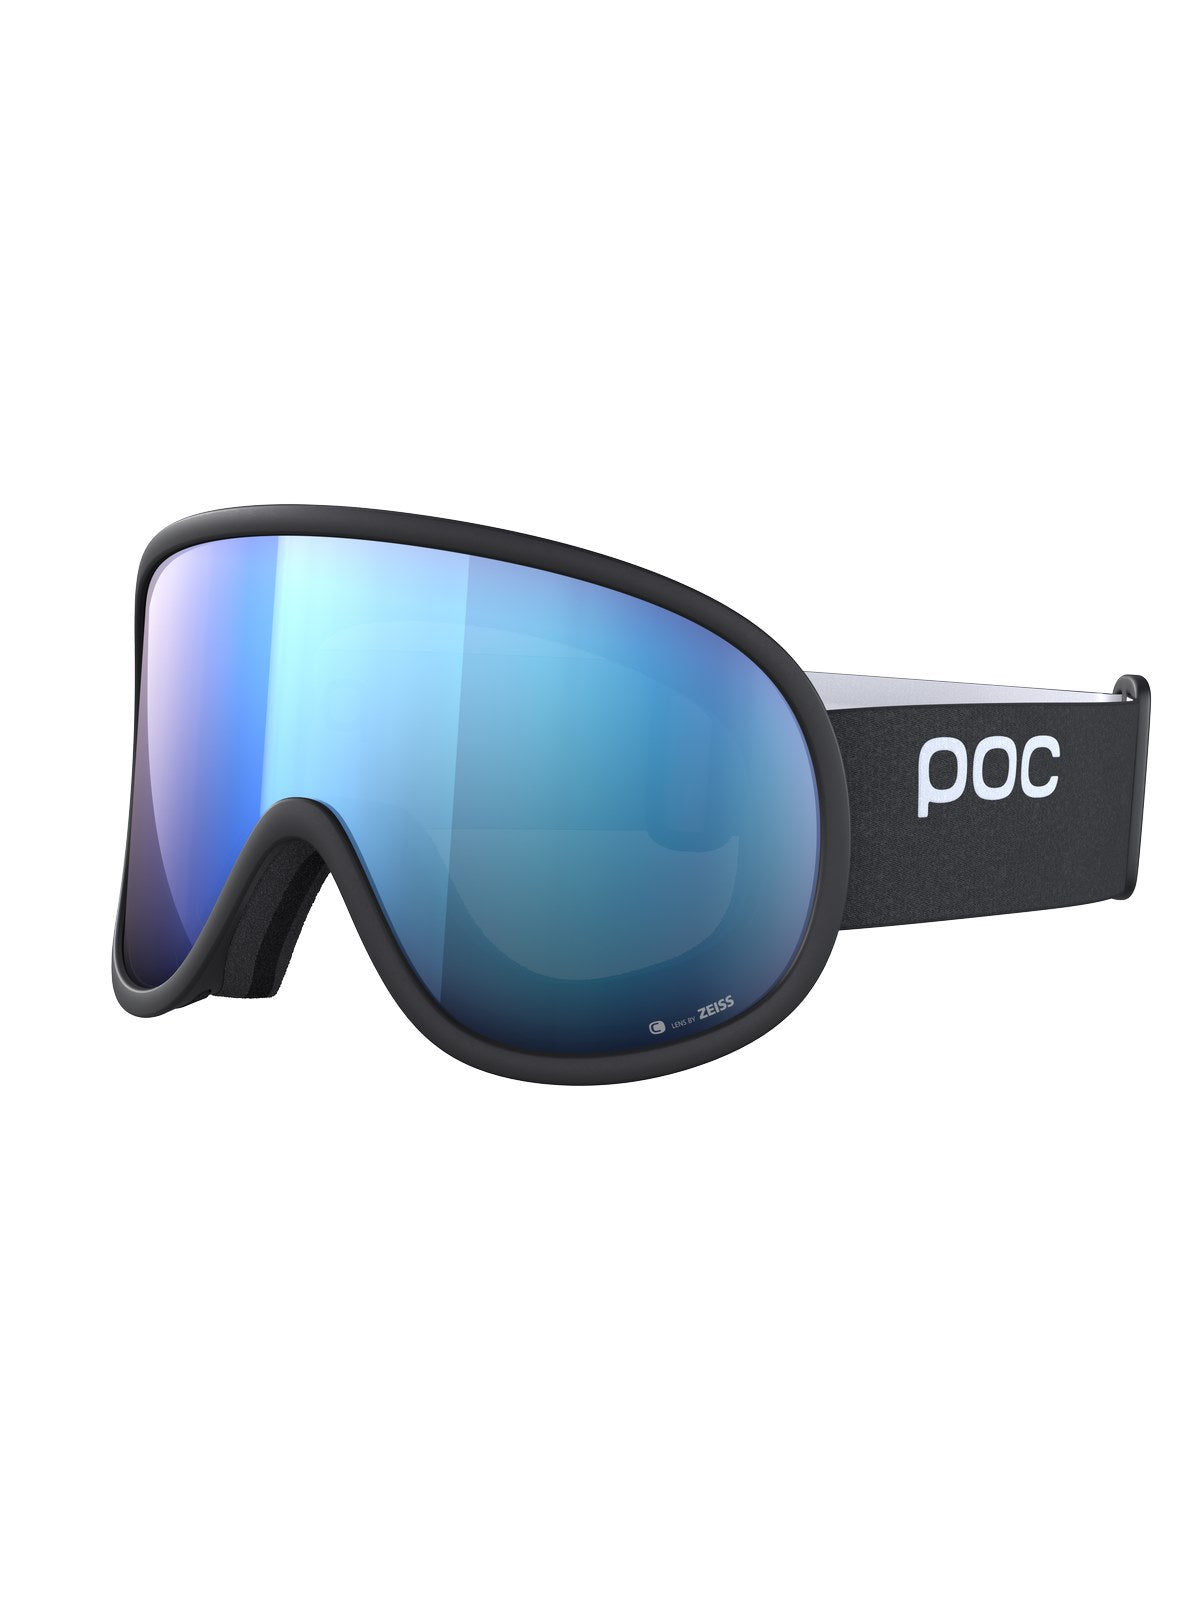 Gogle narciarskie POC Retina - Ur. Black|Pt. Sunny Blue Cat 2